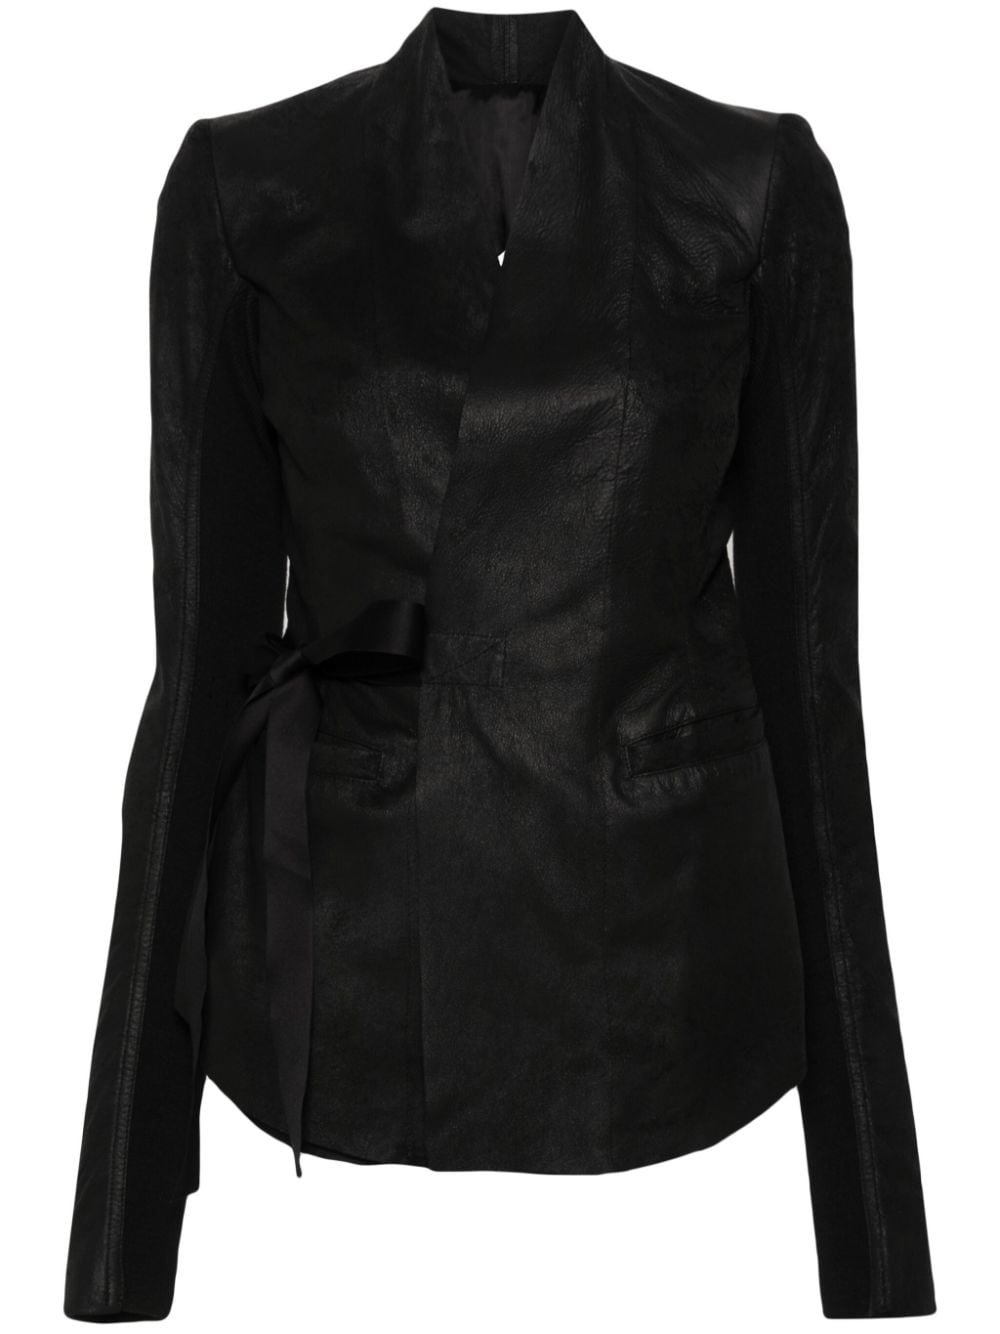 RICK OWENS Cracked Leather V-Neck Jacket for Women